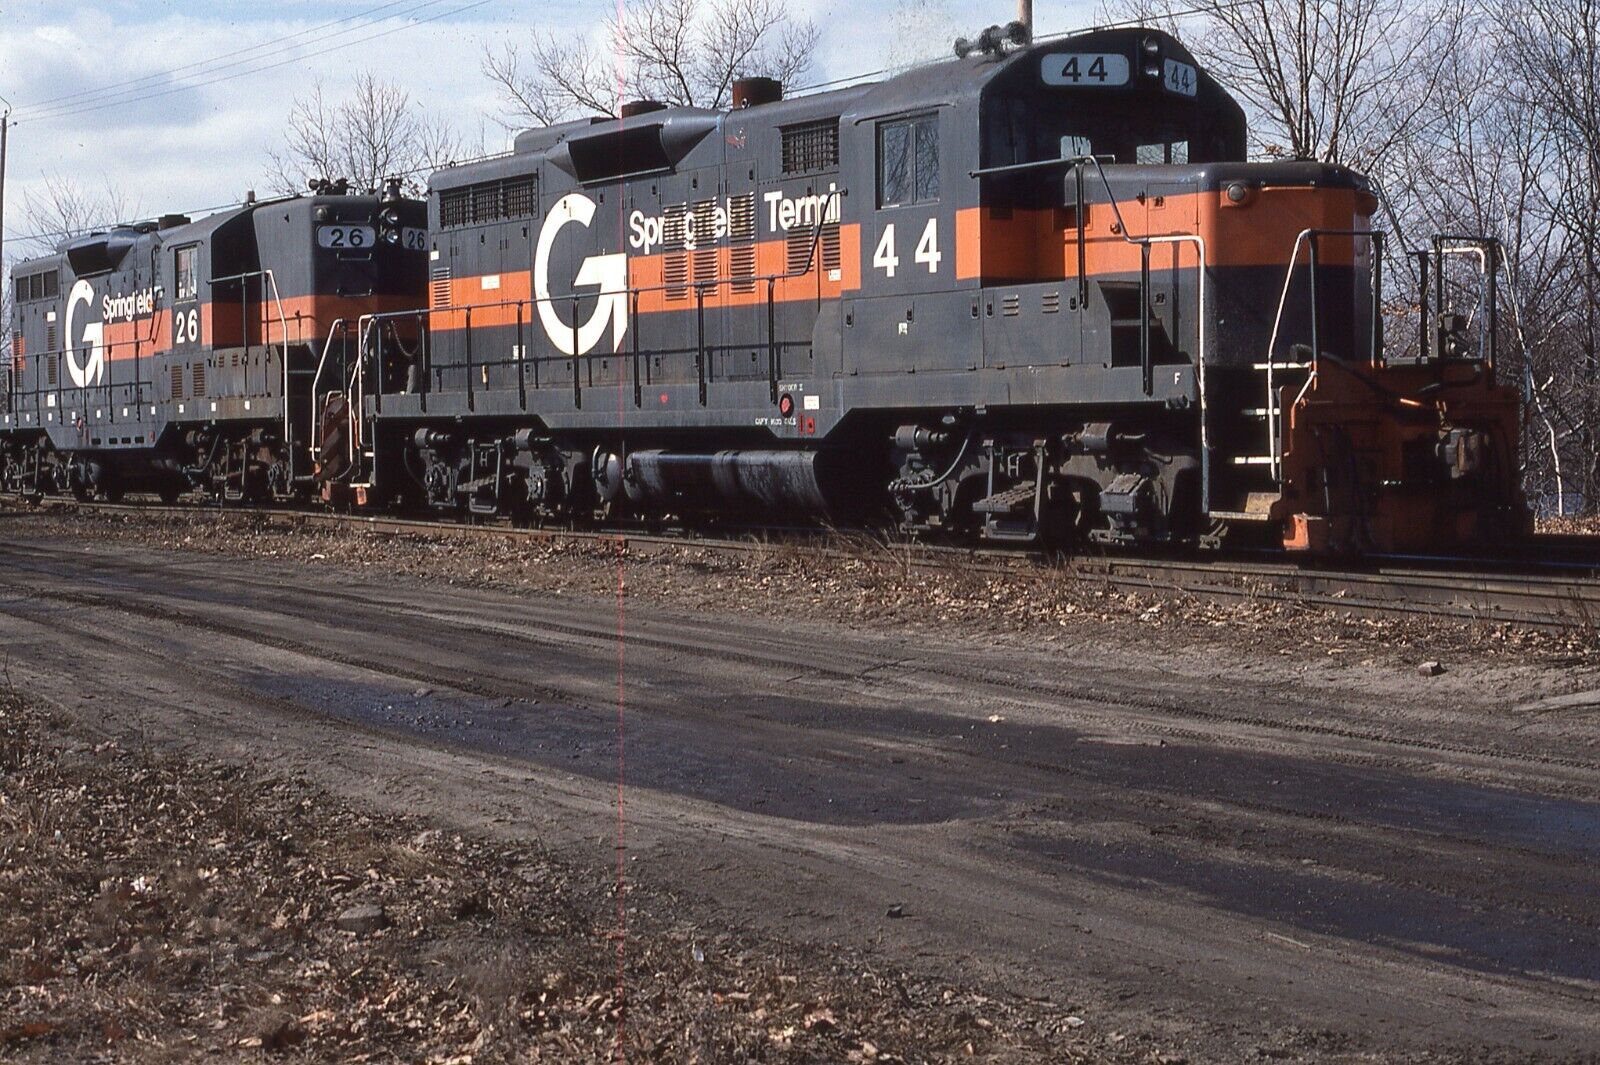 Original Railroad Train Slide Springfield Terminal GP-18 #44 1989 Ayer MA